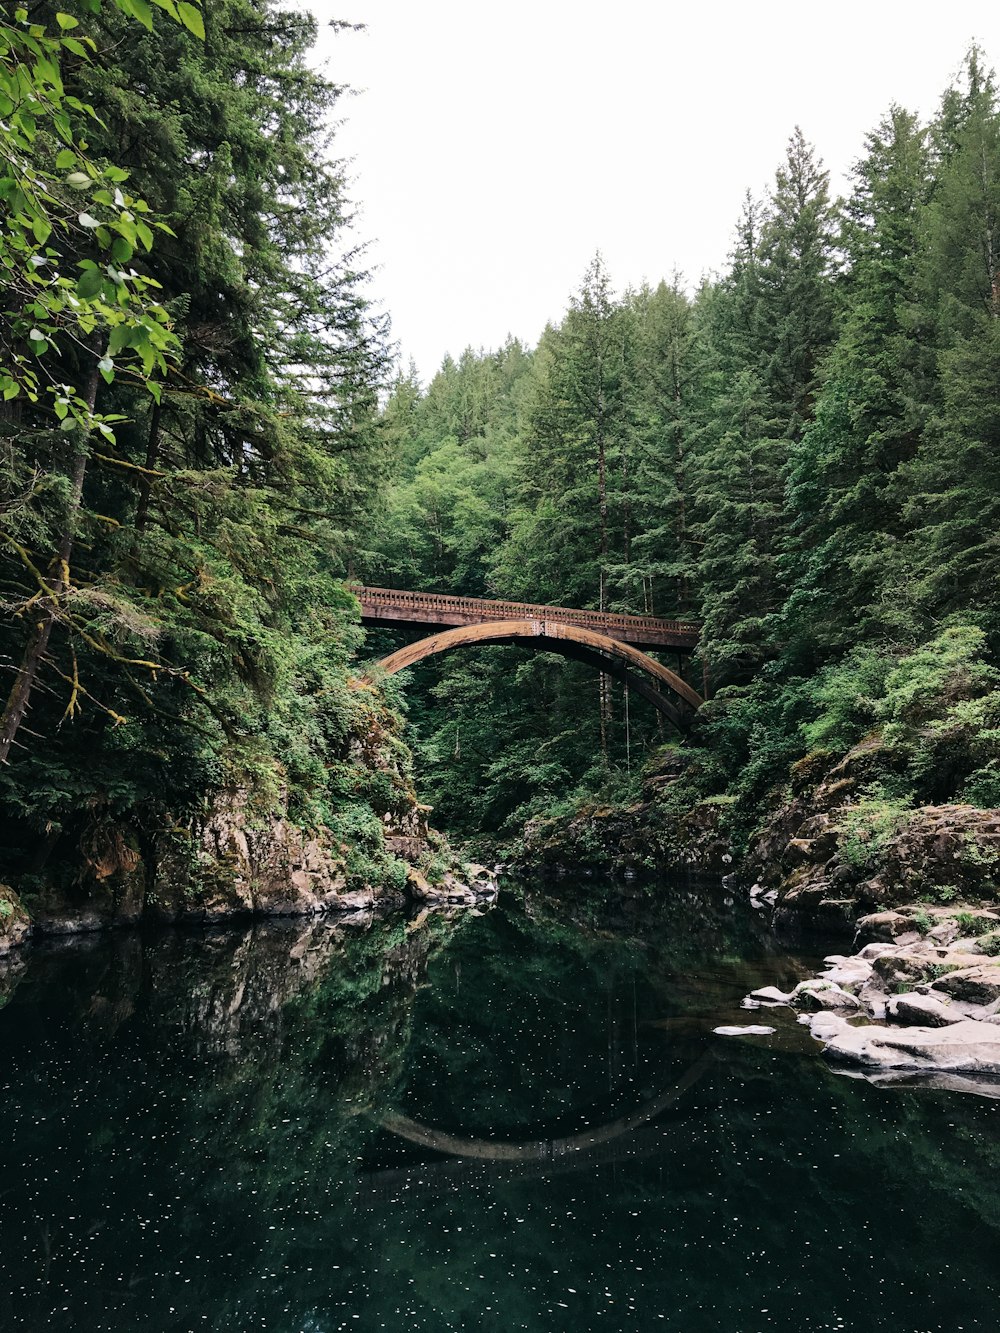 Brücke in der Nähe des Waldes